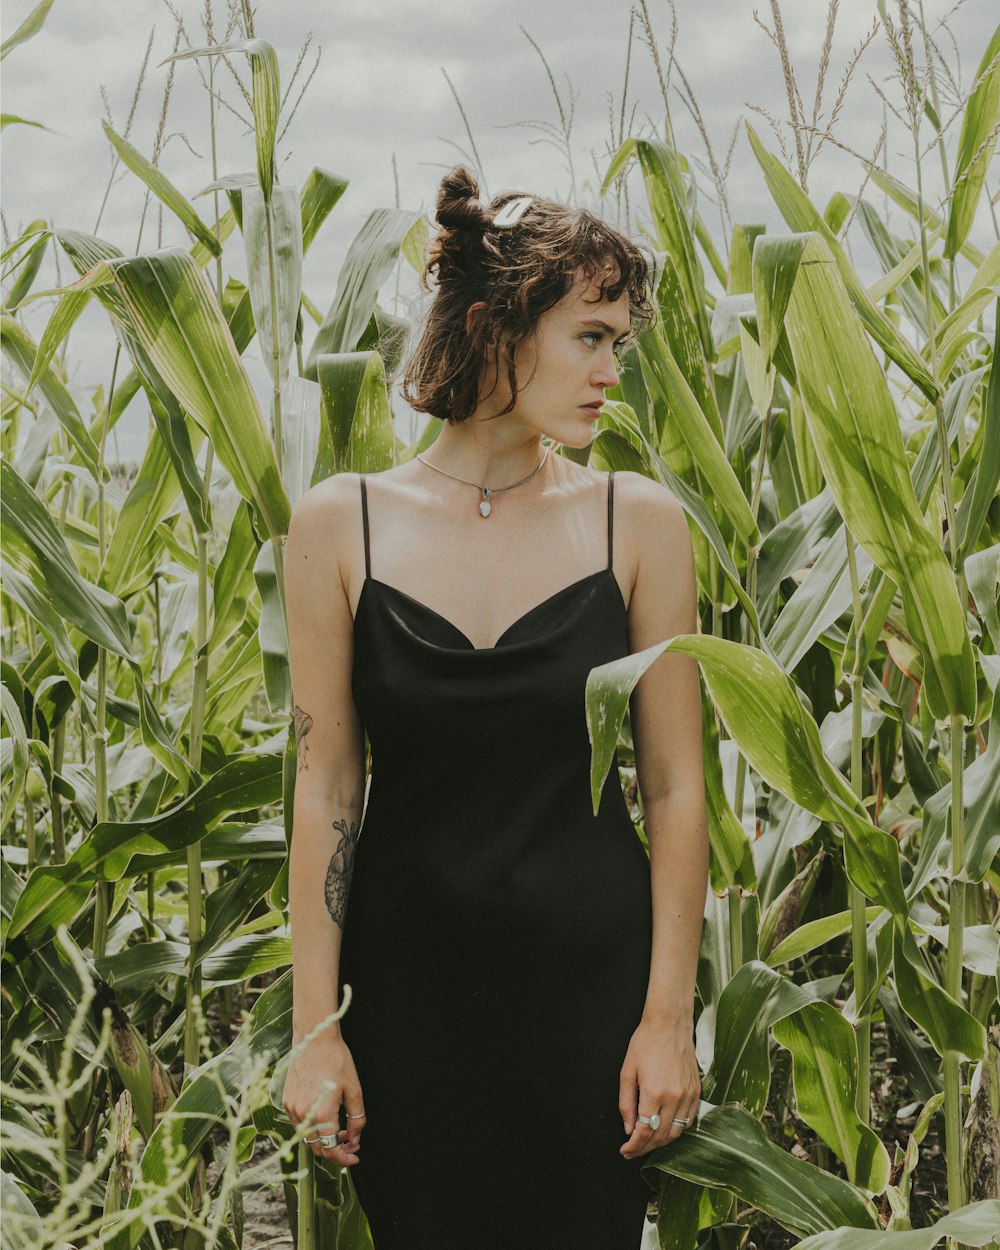 a woman in a black dress standing in a corn field